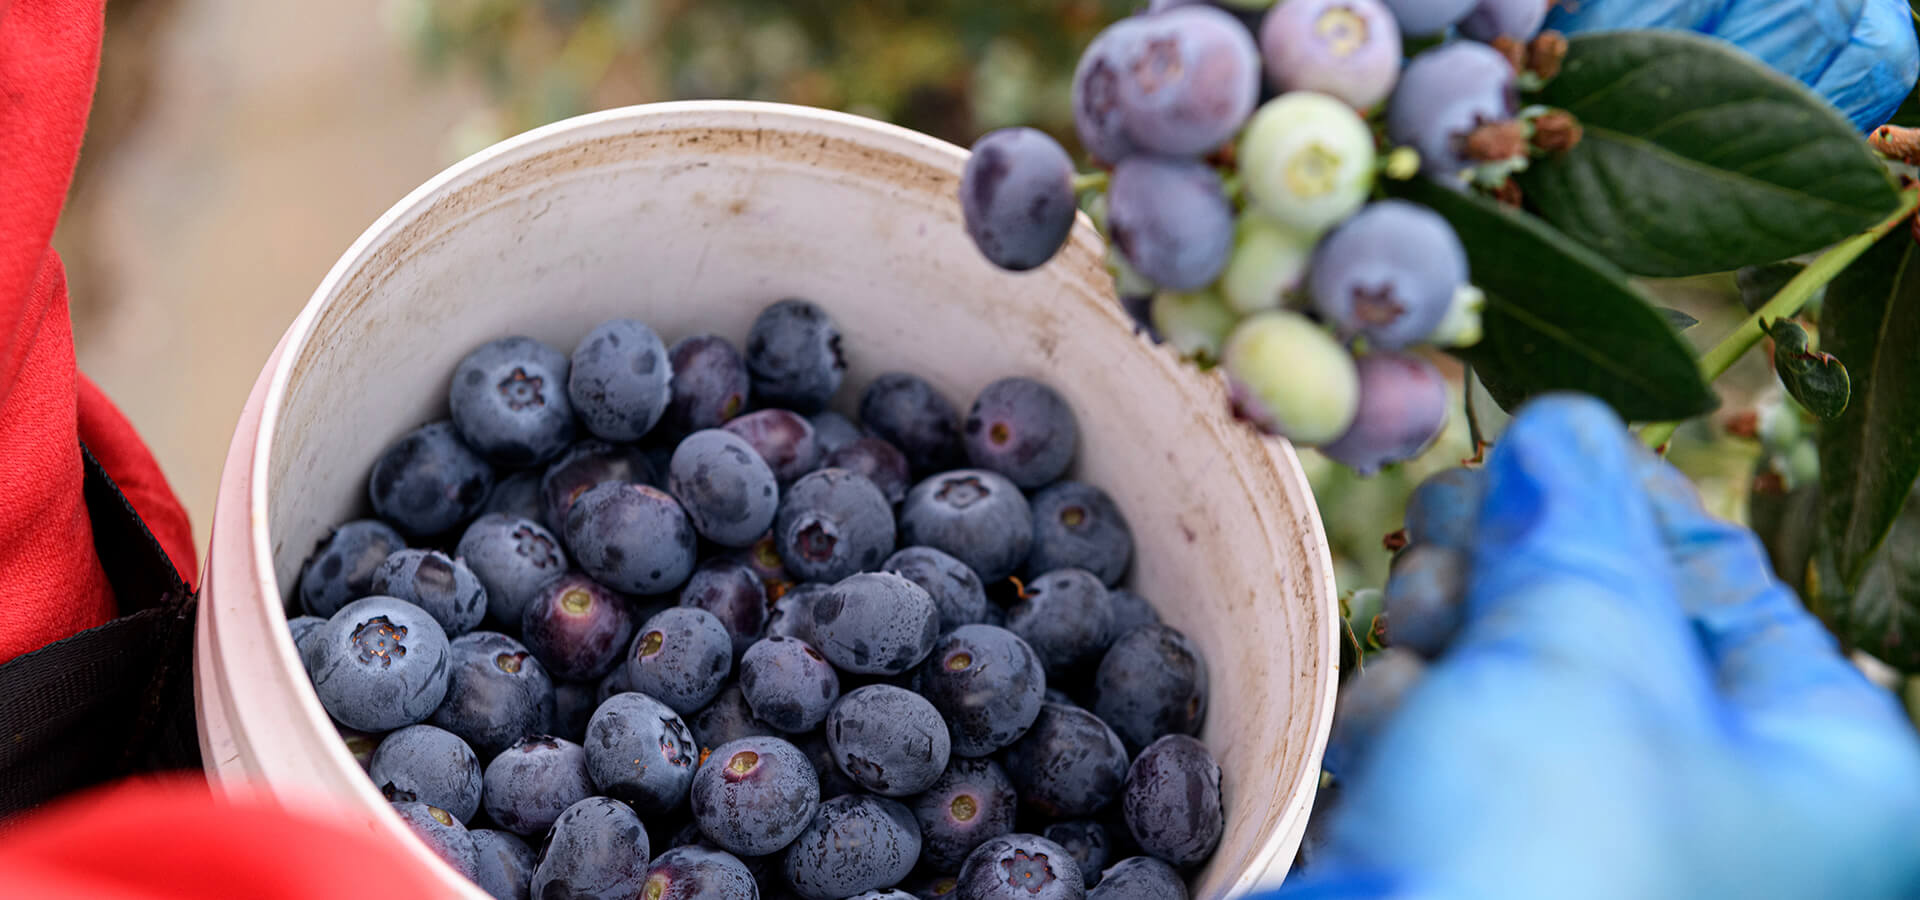 Blueberries case study